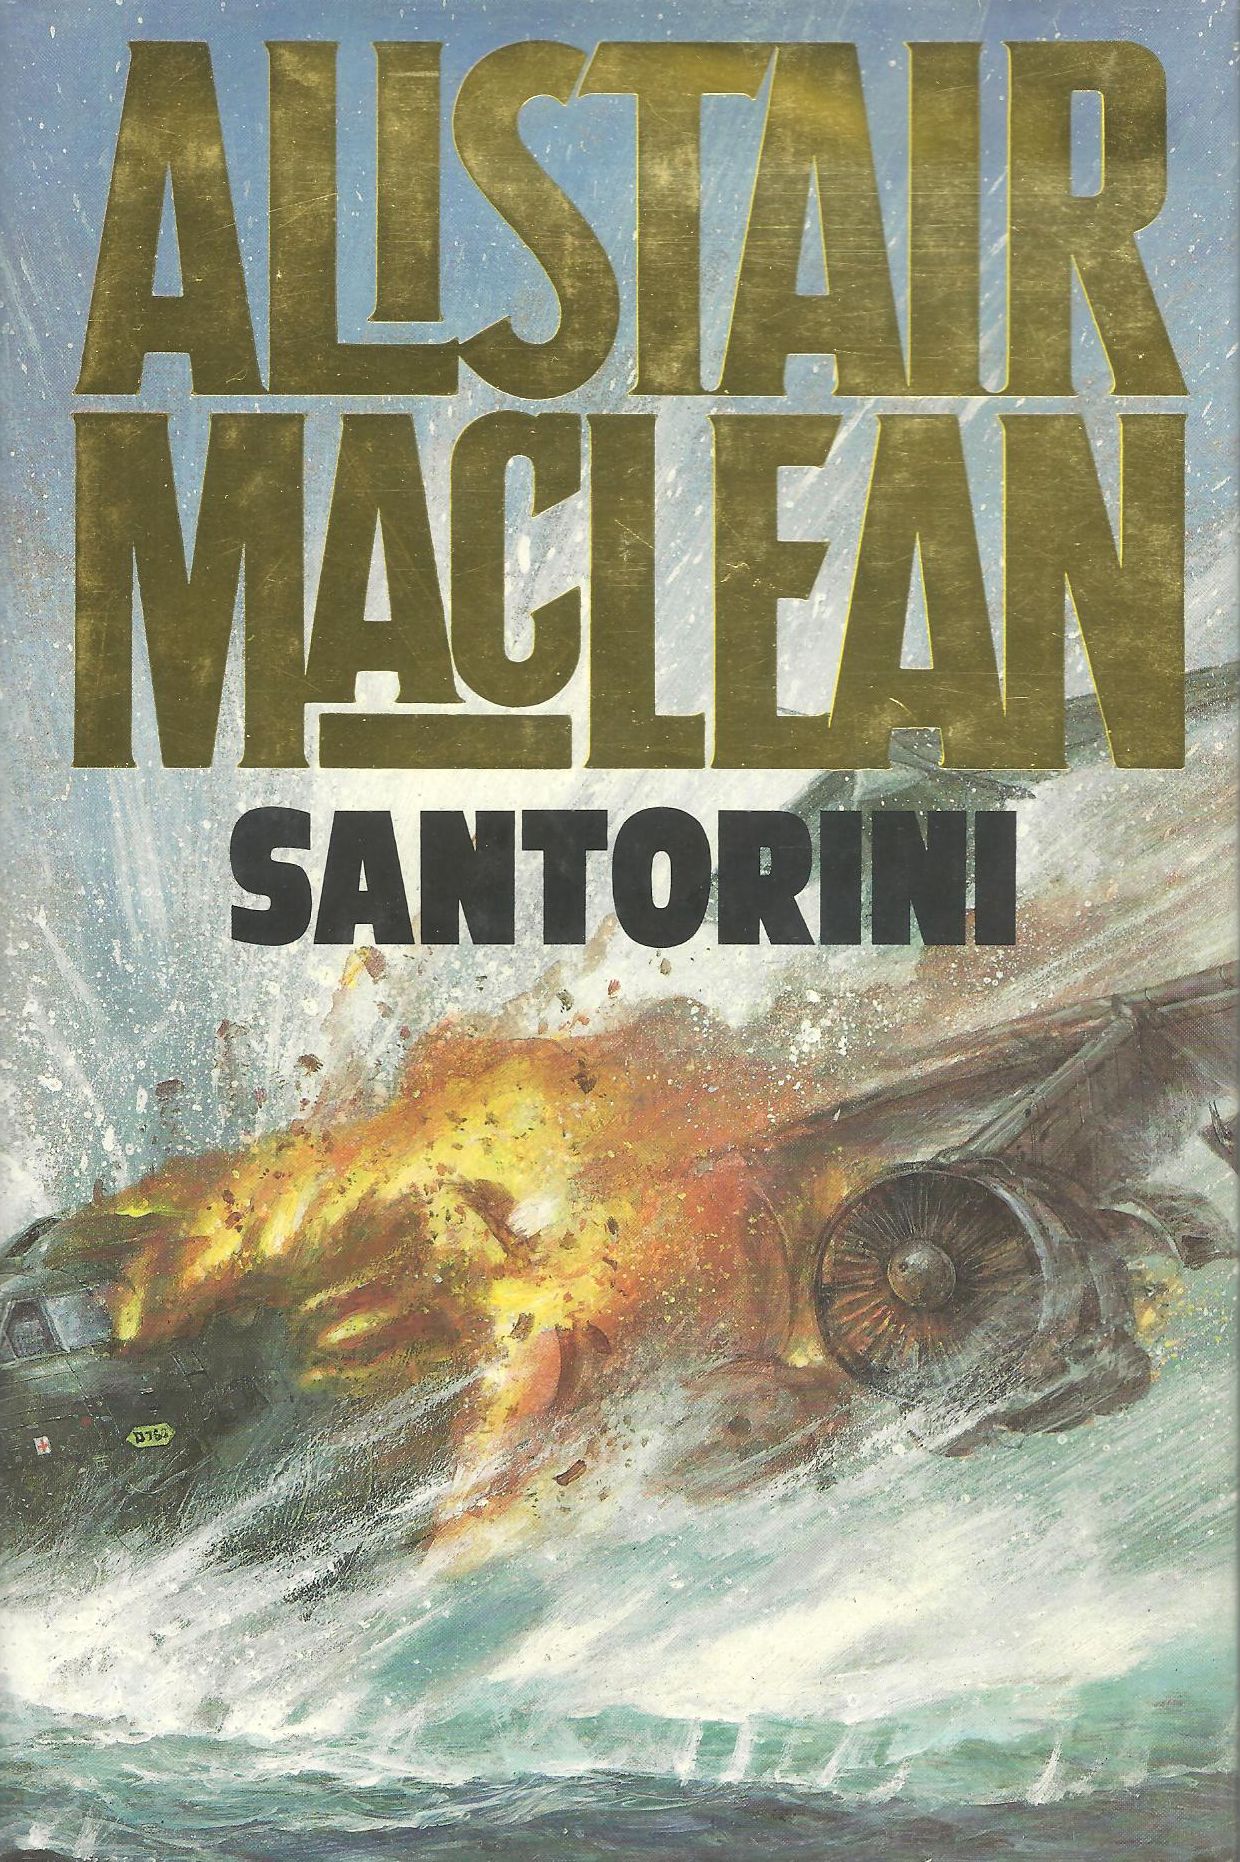 Santorini - UK first edition